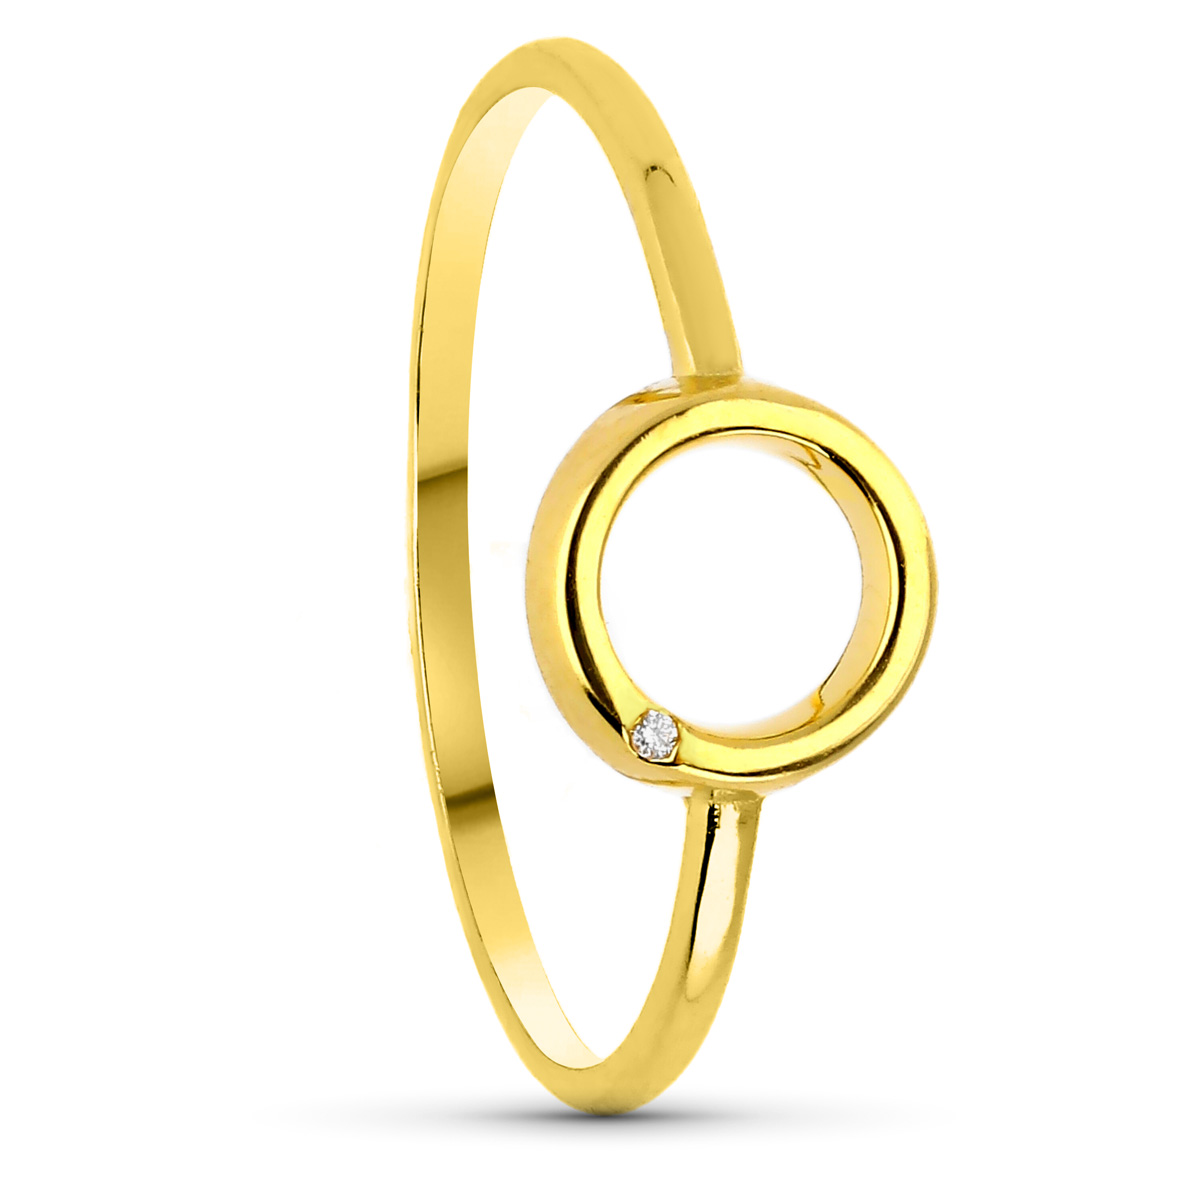 030770600-anillo-oro-amarillo-circulo-diamante-joyeria-acebo